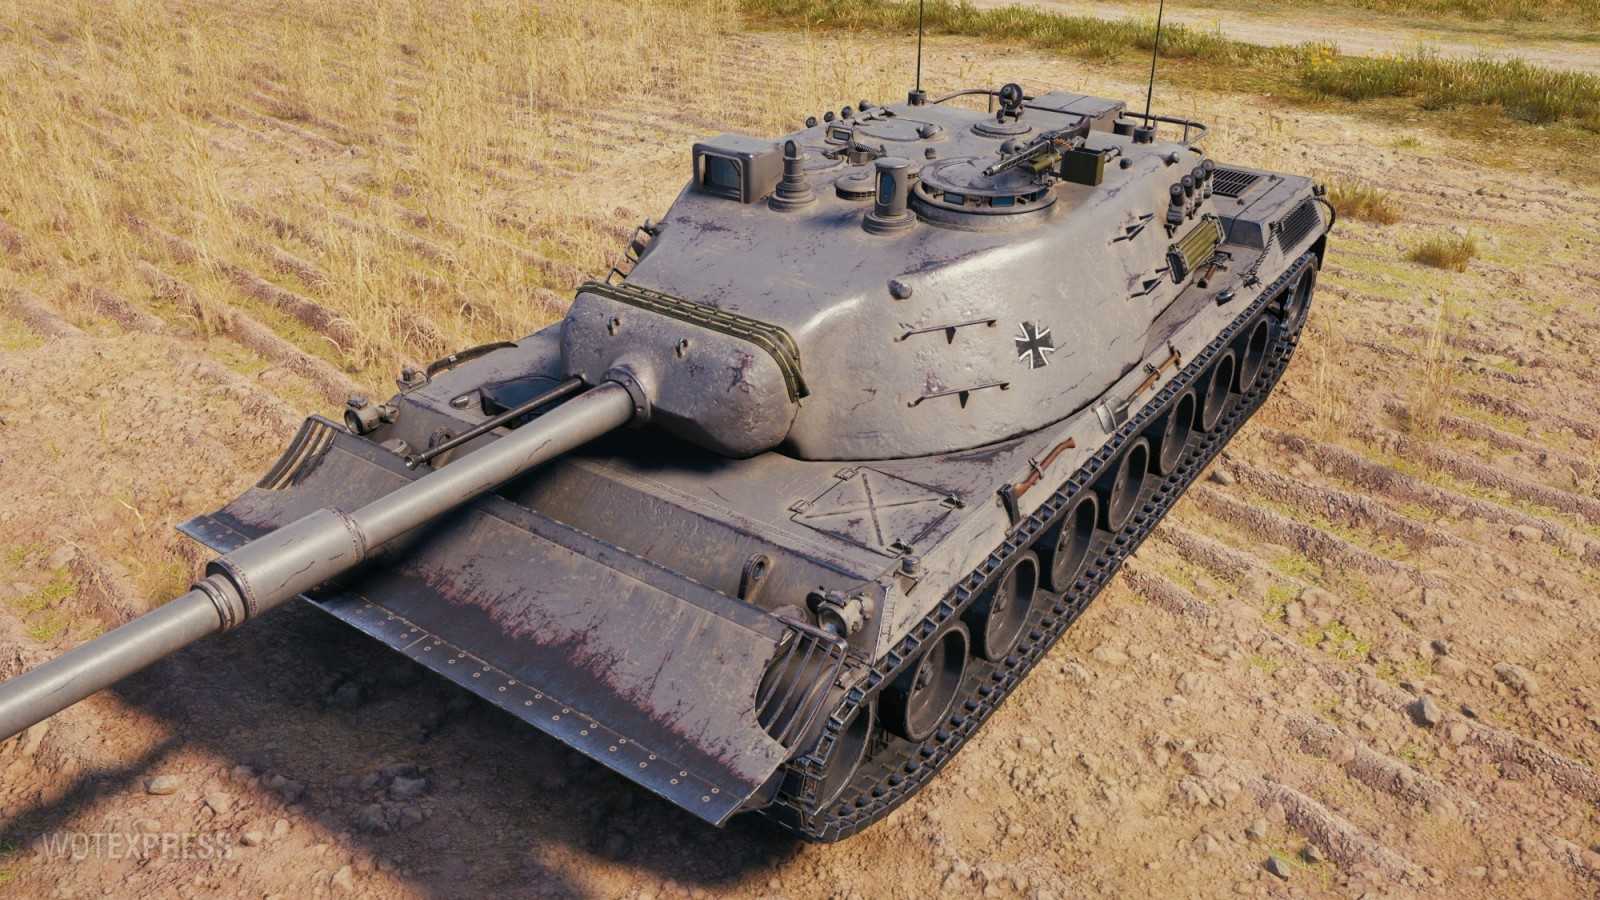 39702_skrinshoty-tanka-kampfpanzer-07-pe-